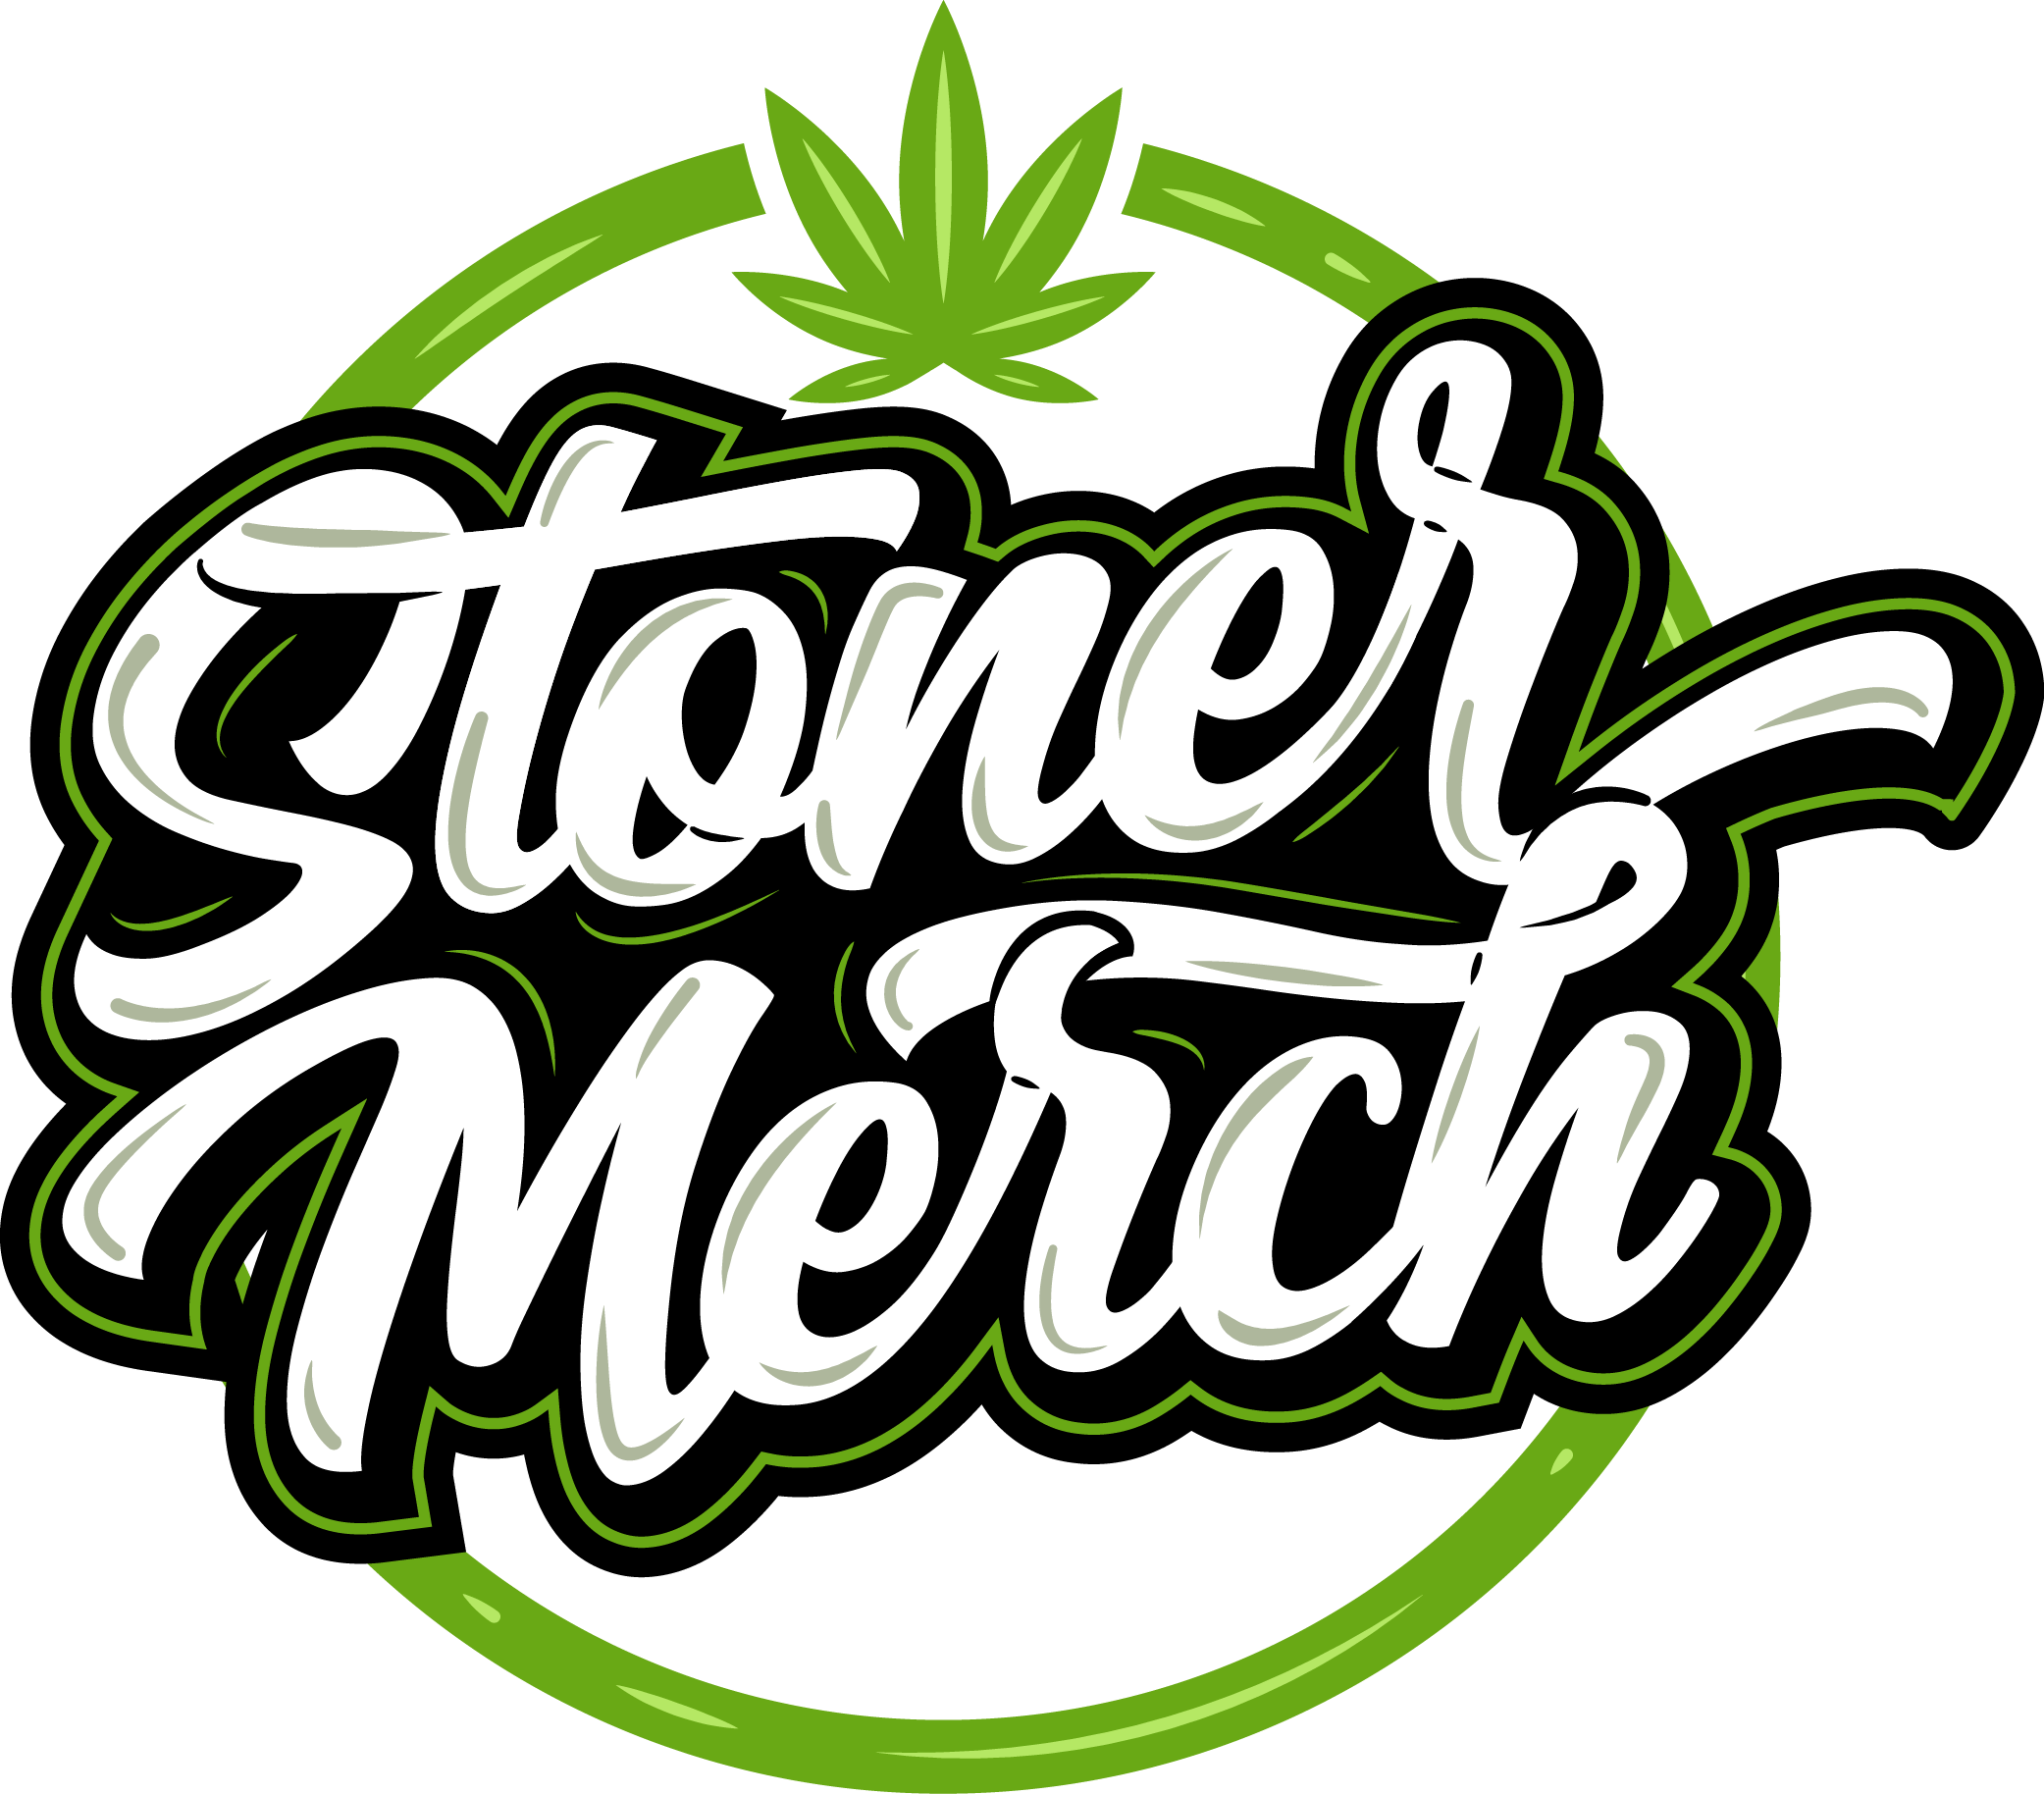 The Official Stoner Merch Shop